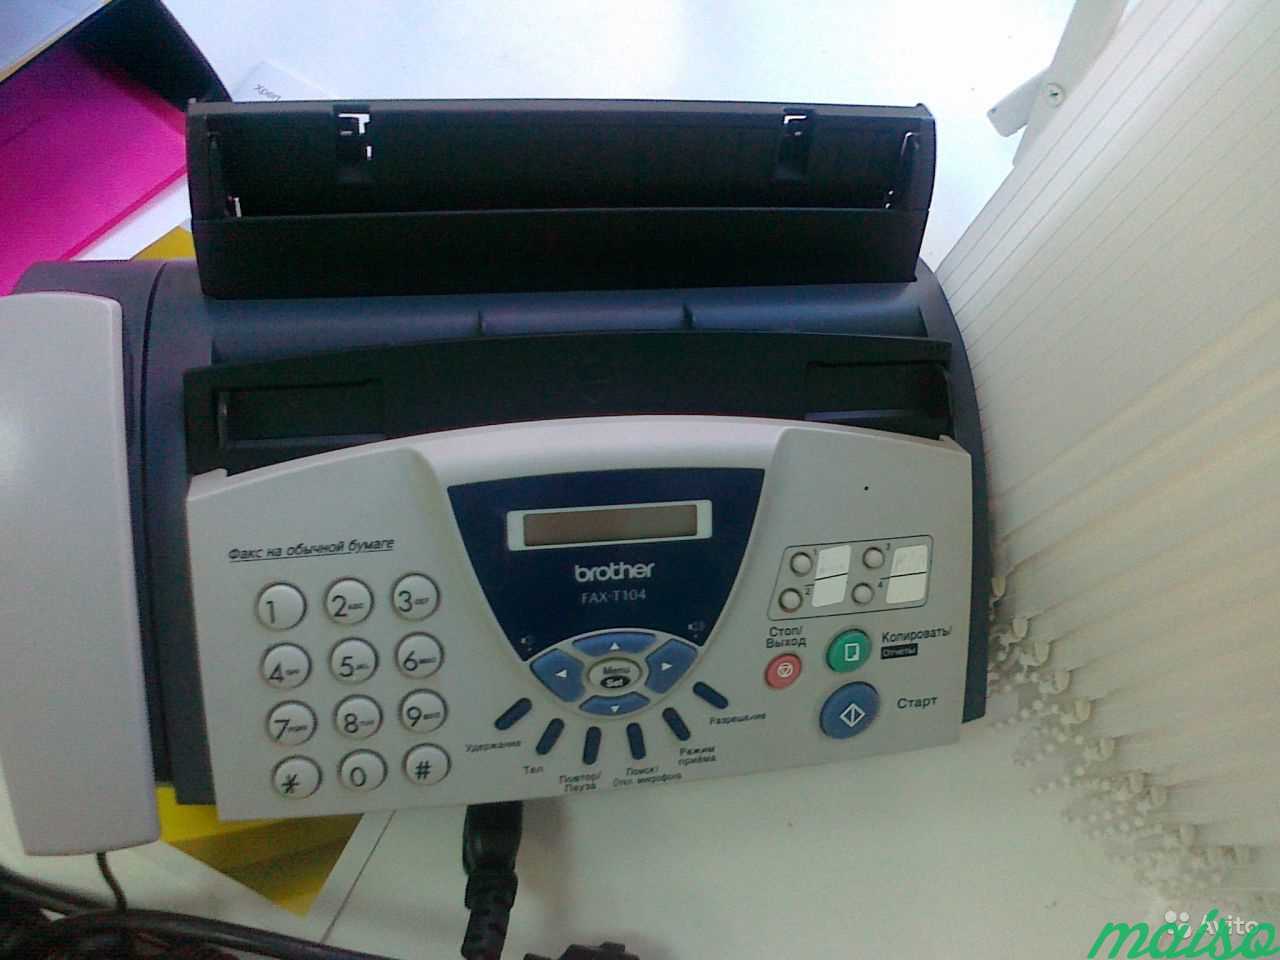 Факс brother fax-t104 в Санкт-Петербурге. Фото 2